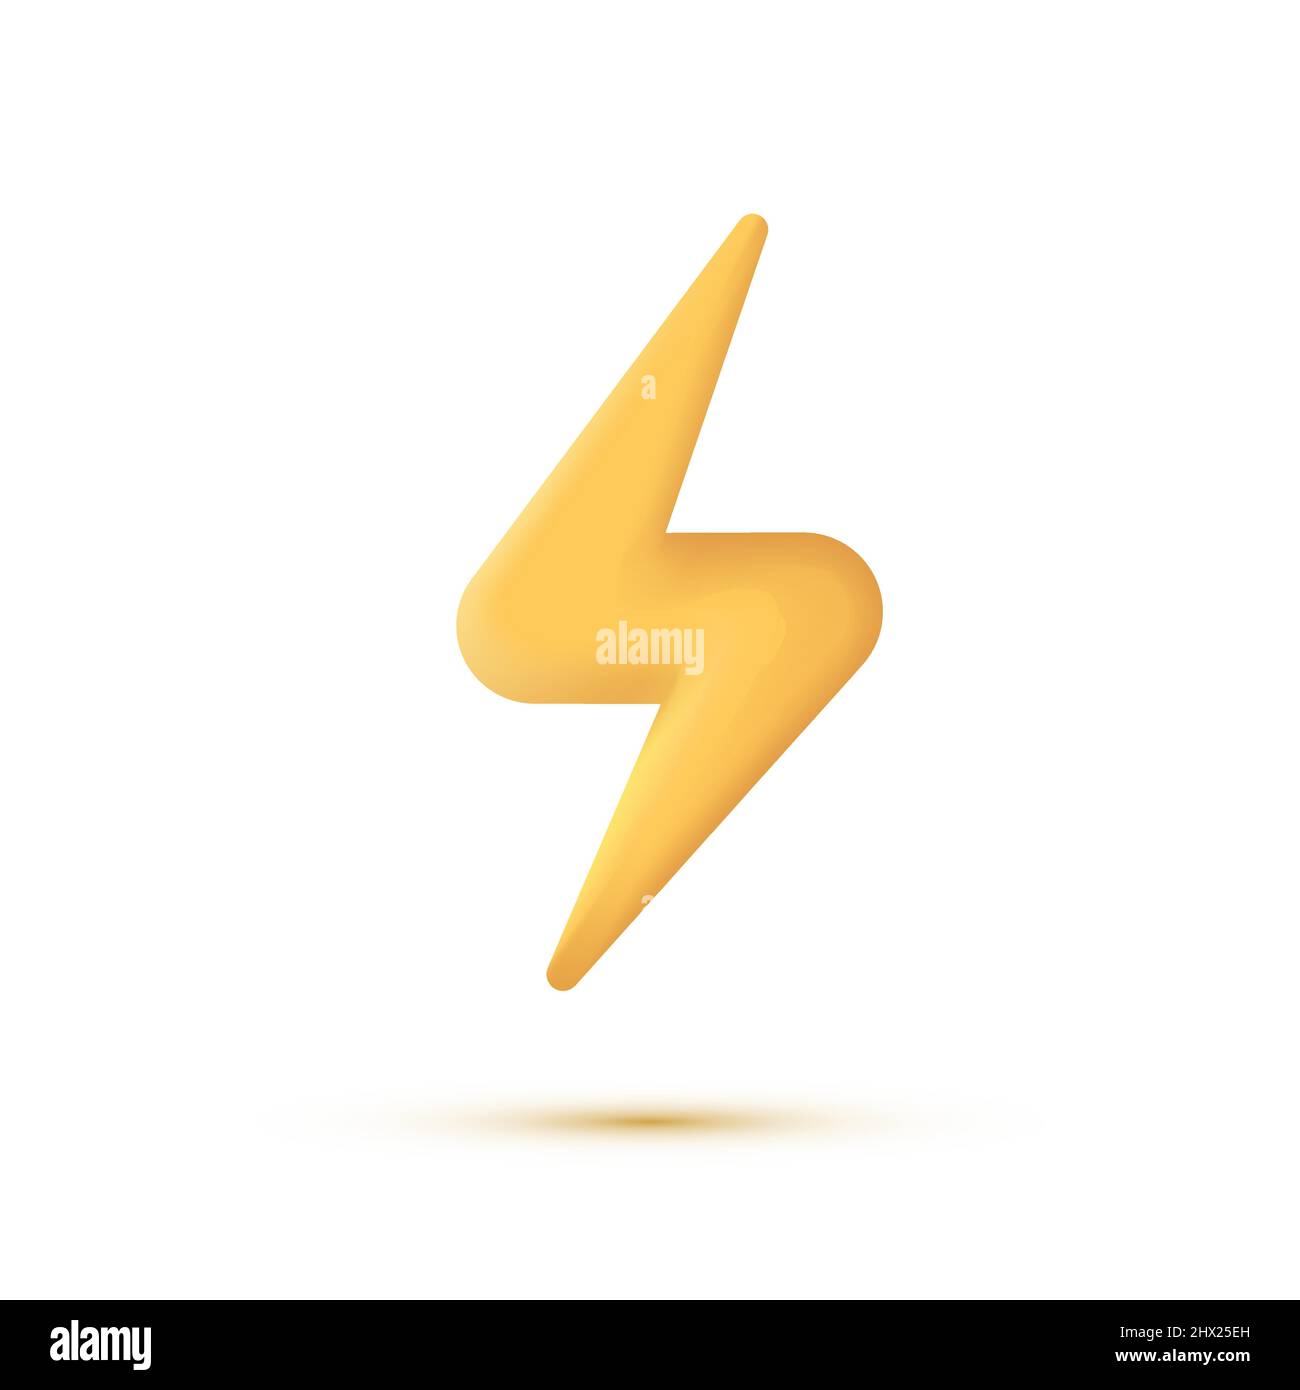 Thunder bolt flash logo icon. Thunderbolt instant storm sign graphic symbol lightning energy icon Stock Vector